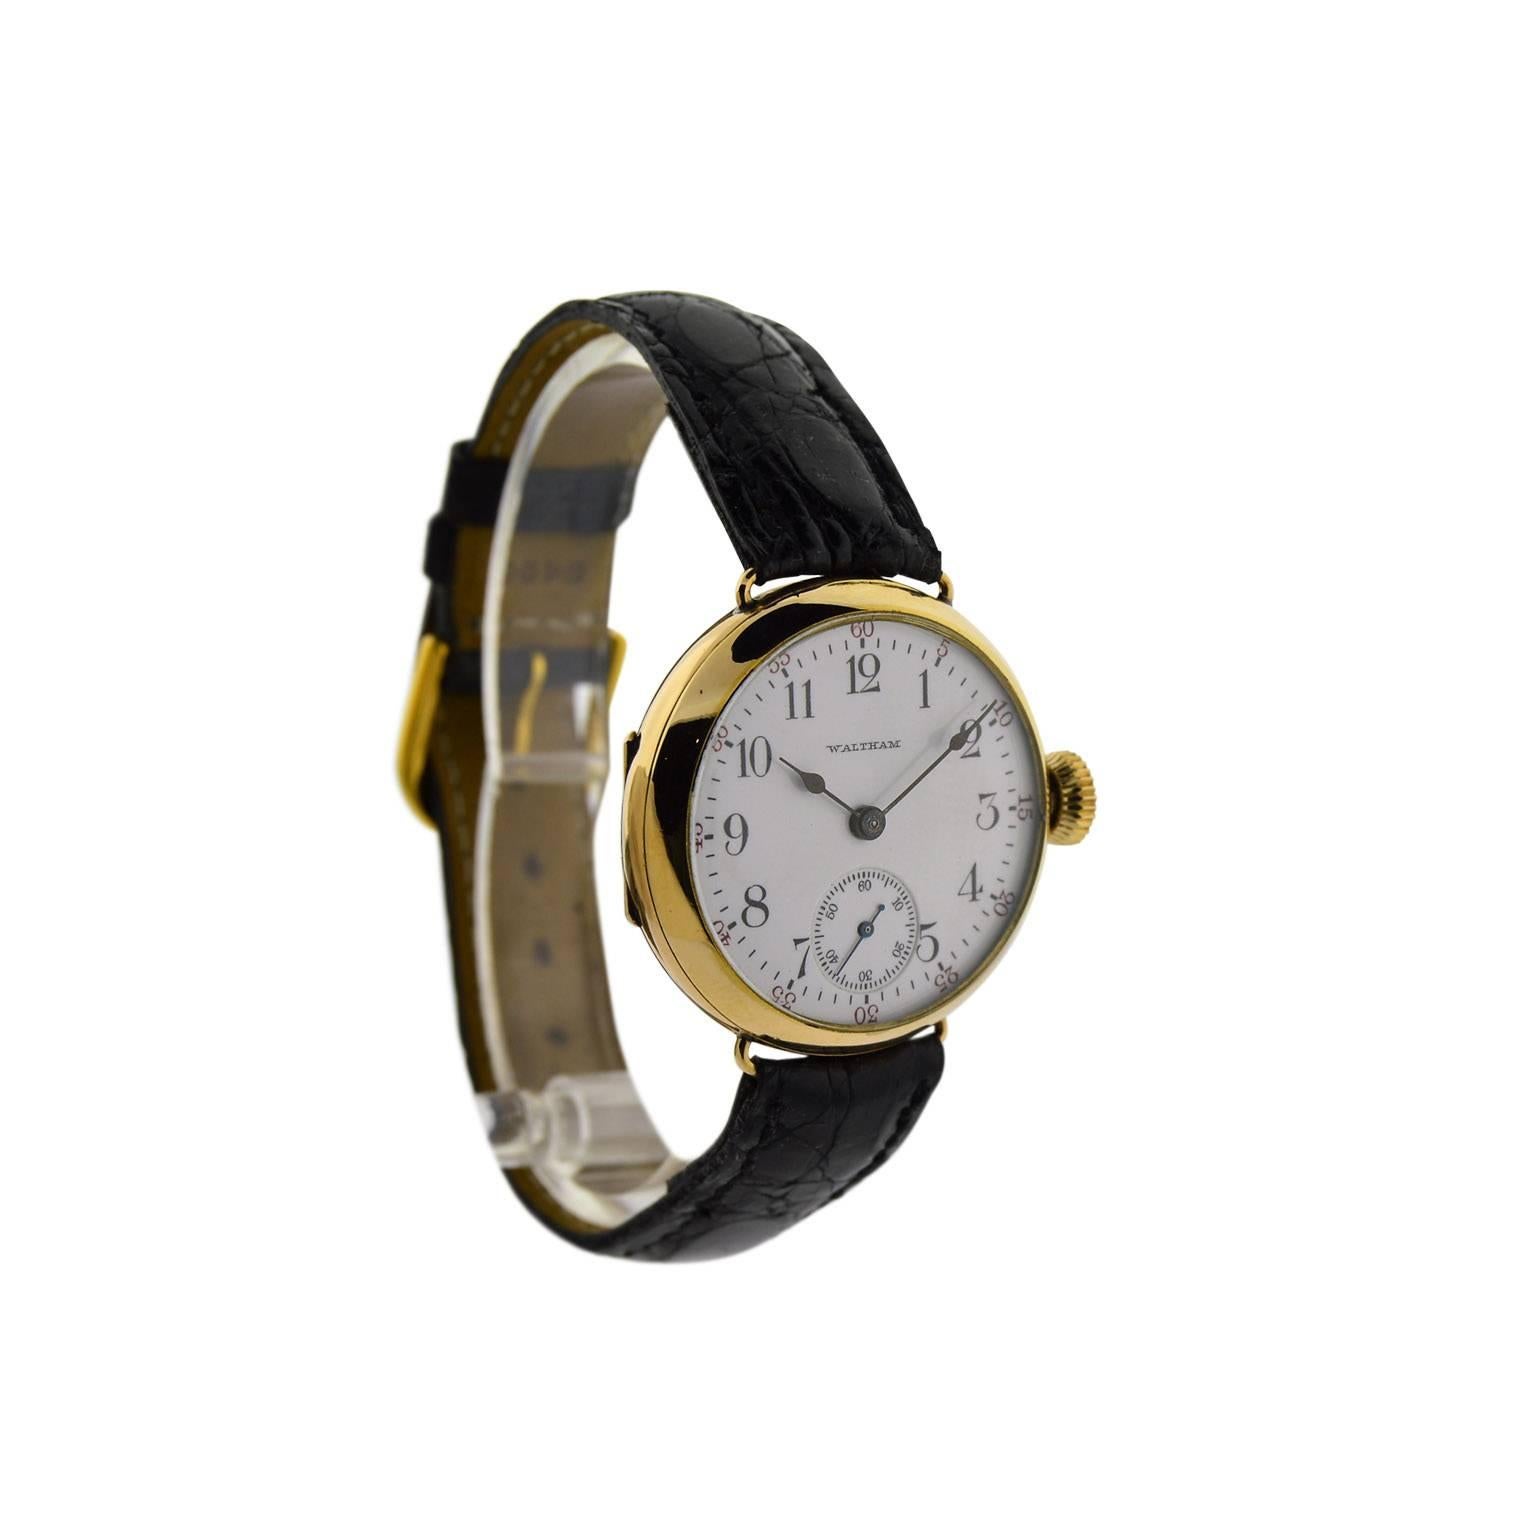 Art Deco Waltham Yellow Gold Filled Campaign Style Original Enamel Dial Manual Wristwatch